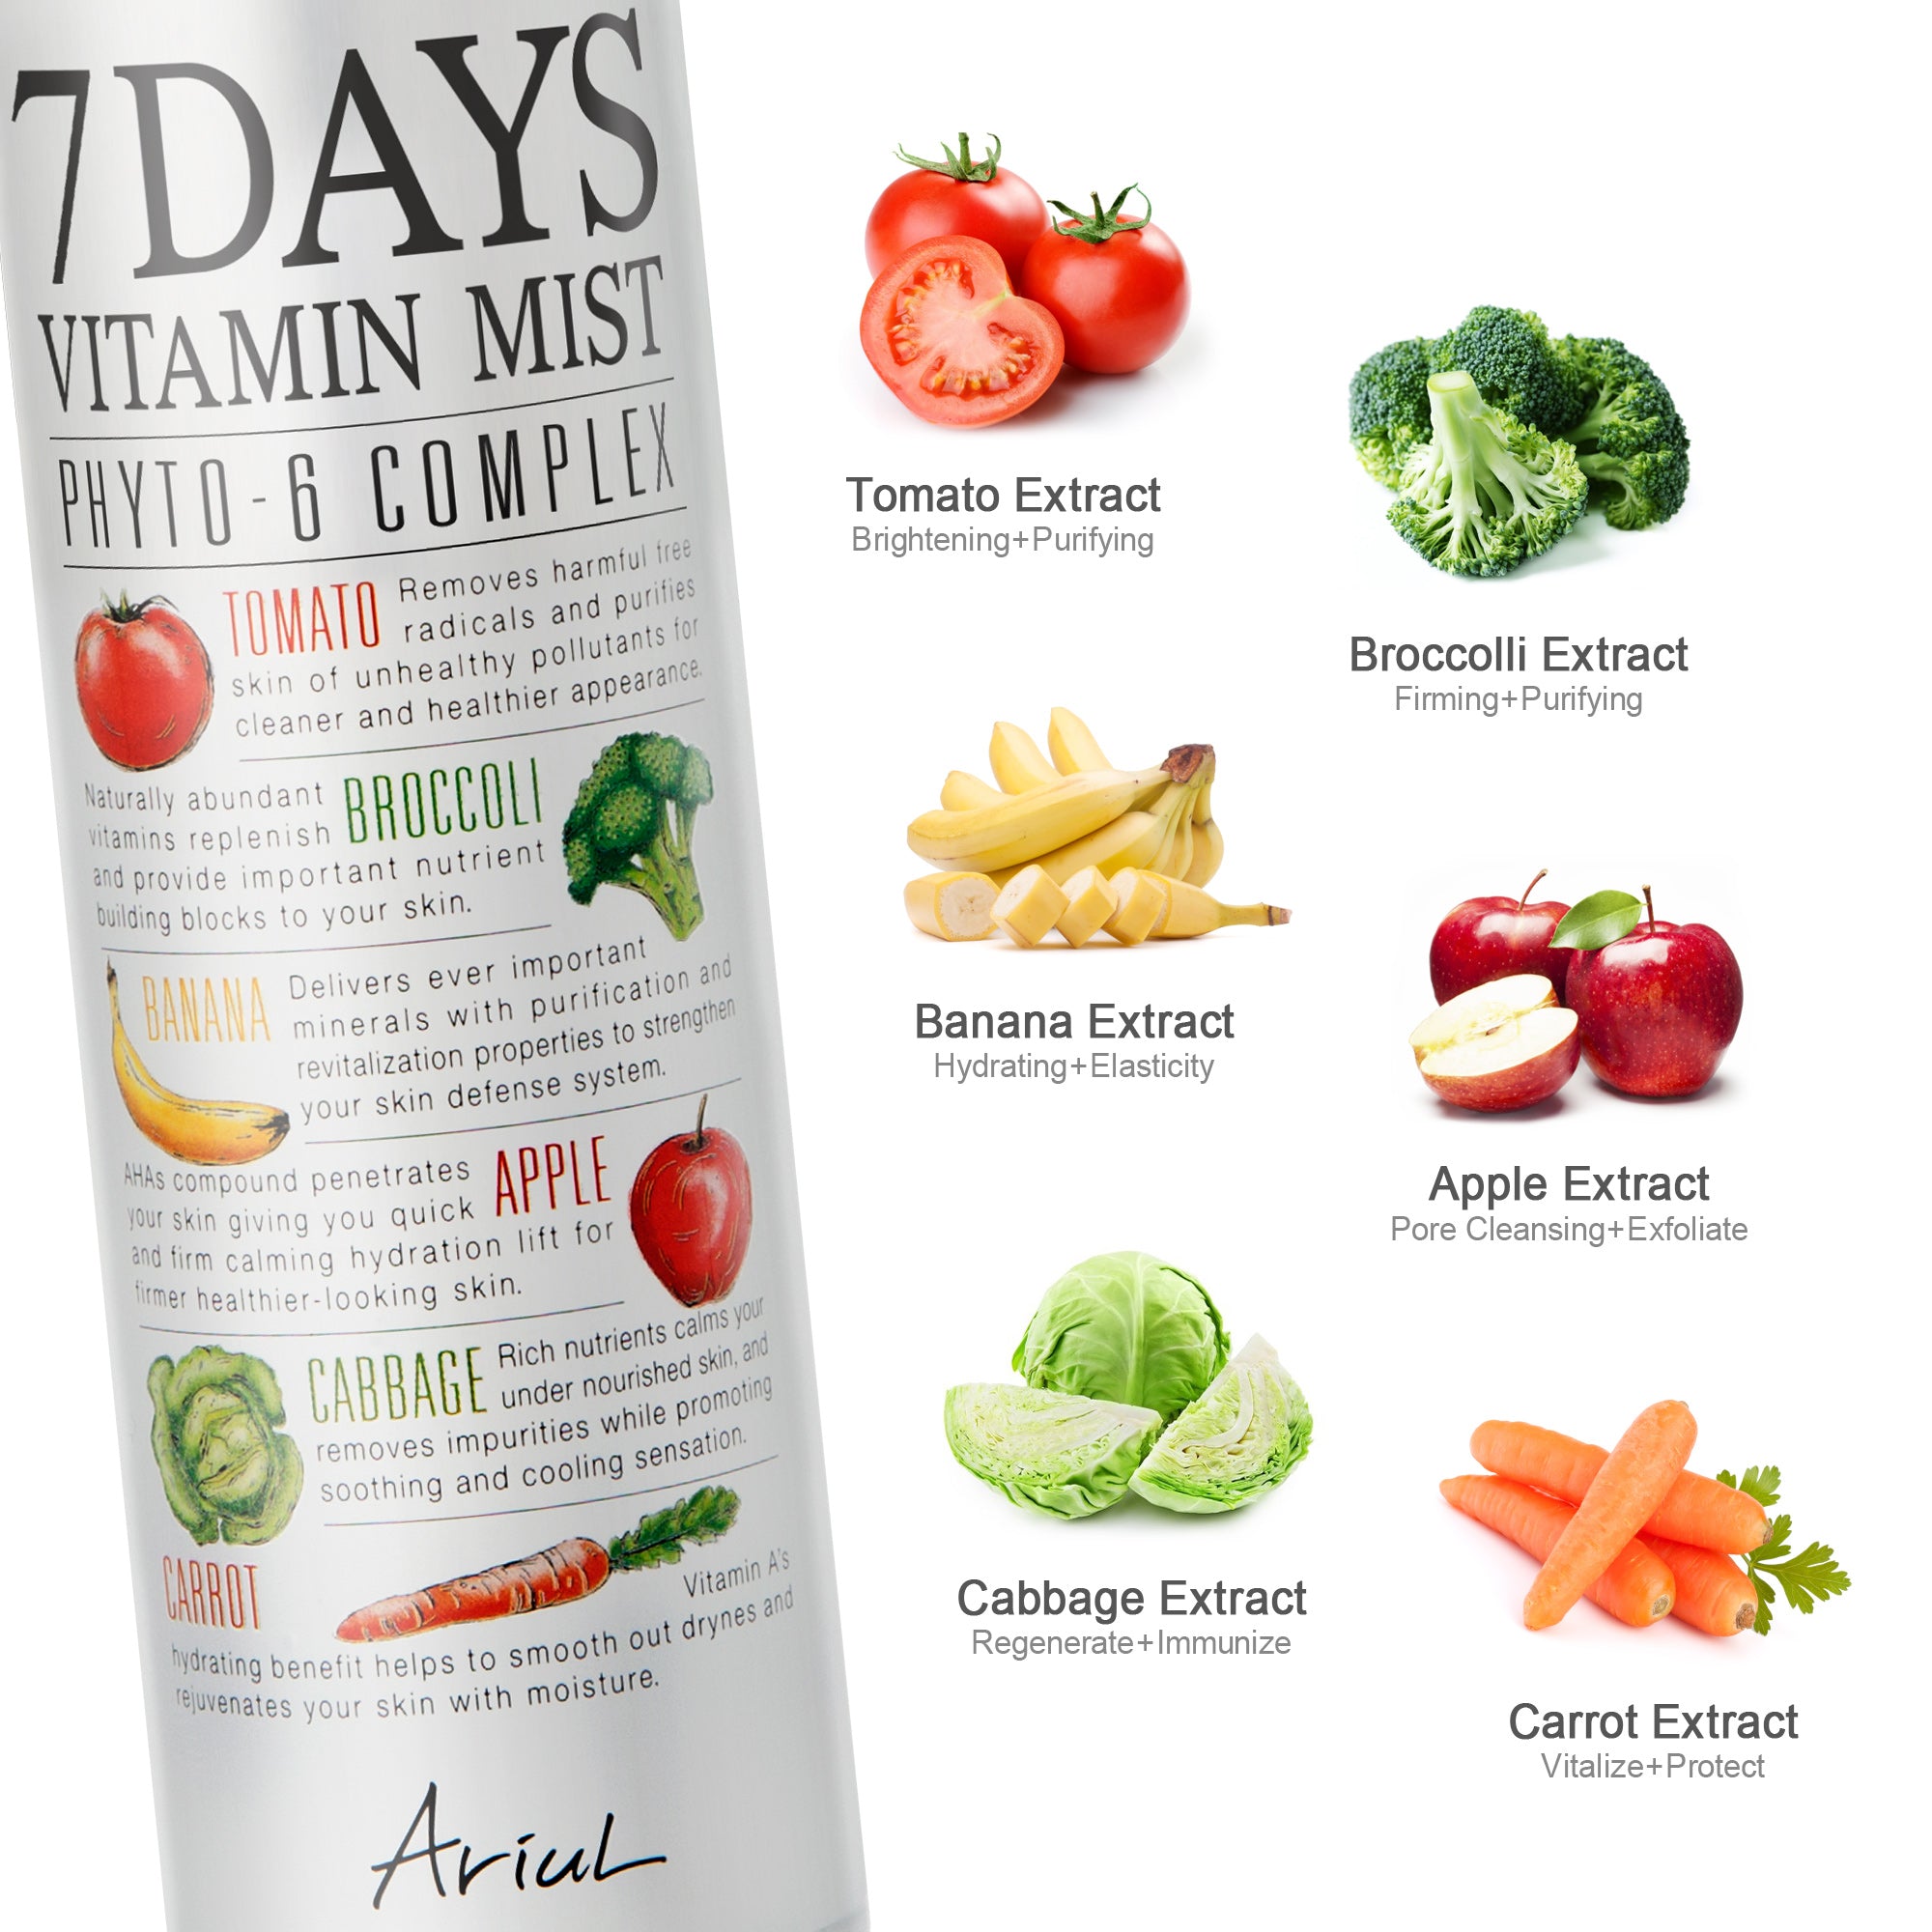 Ariul 7Days Vitamin Mist